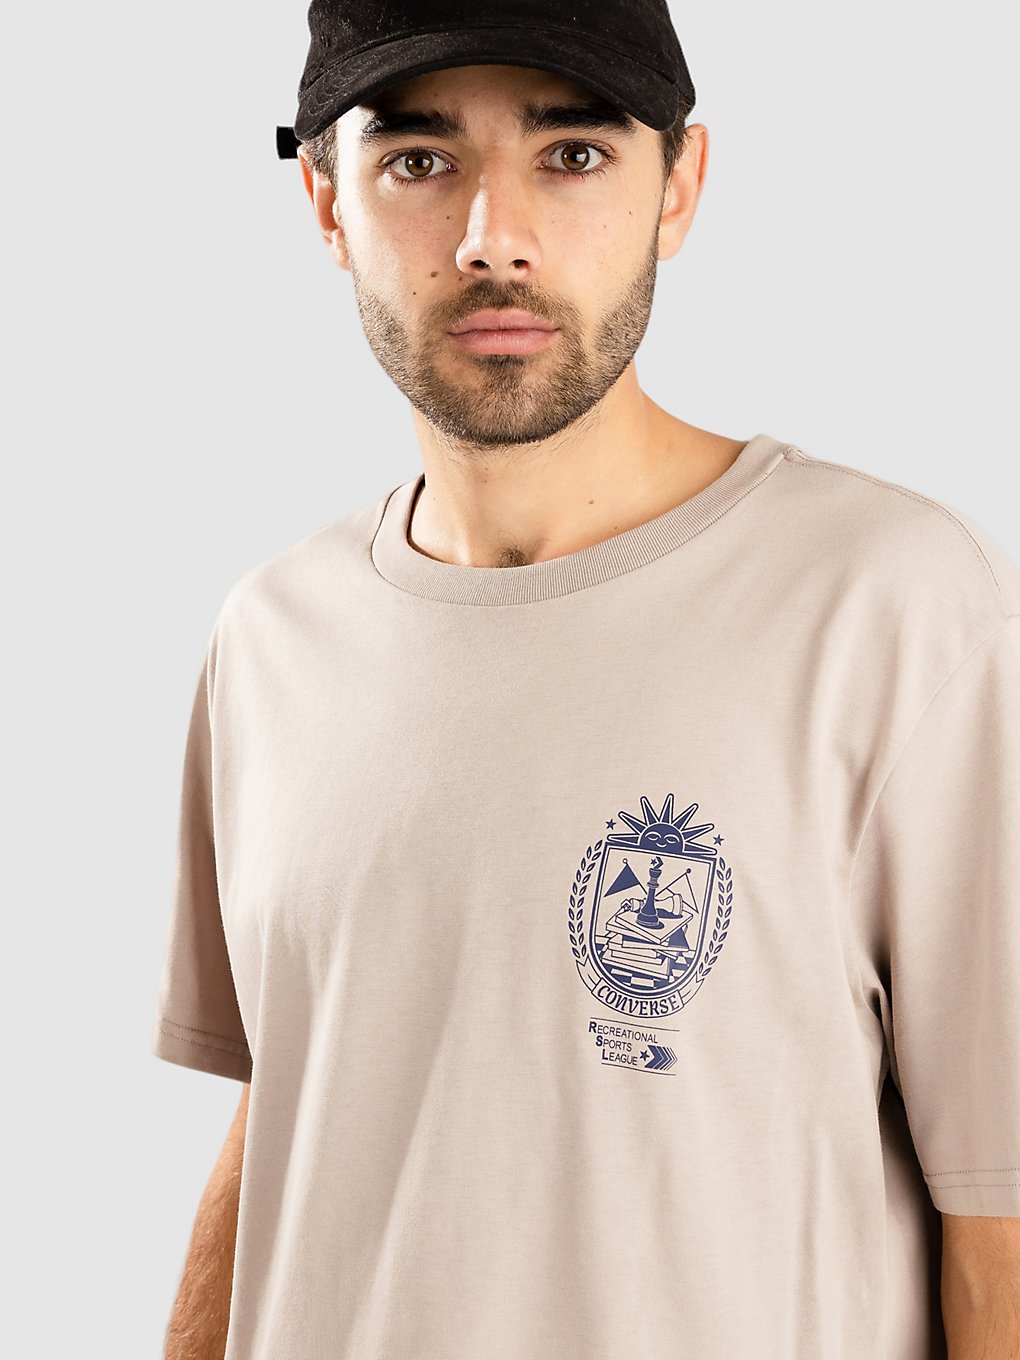 Converse Chess League Graphic T-Shirt wonder stone kaufen